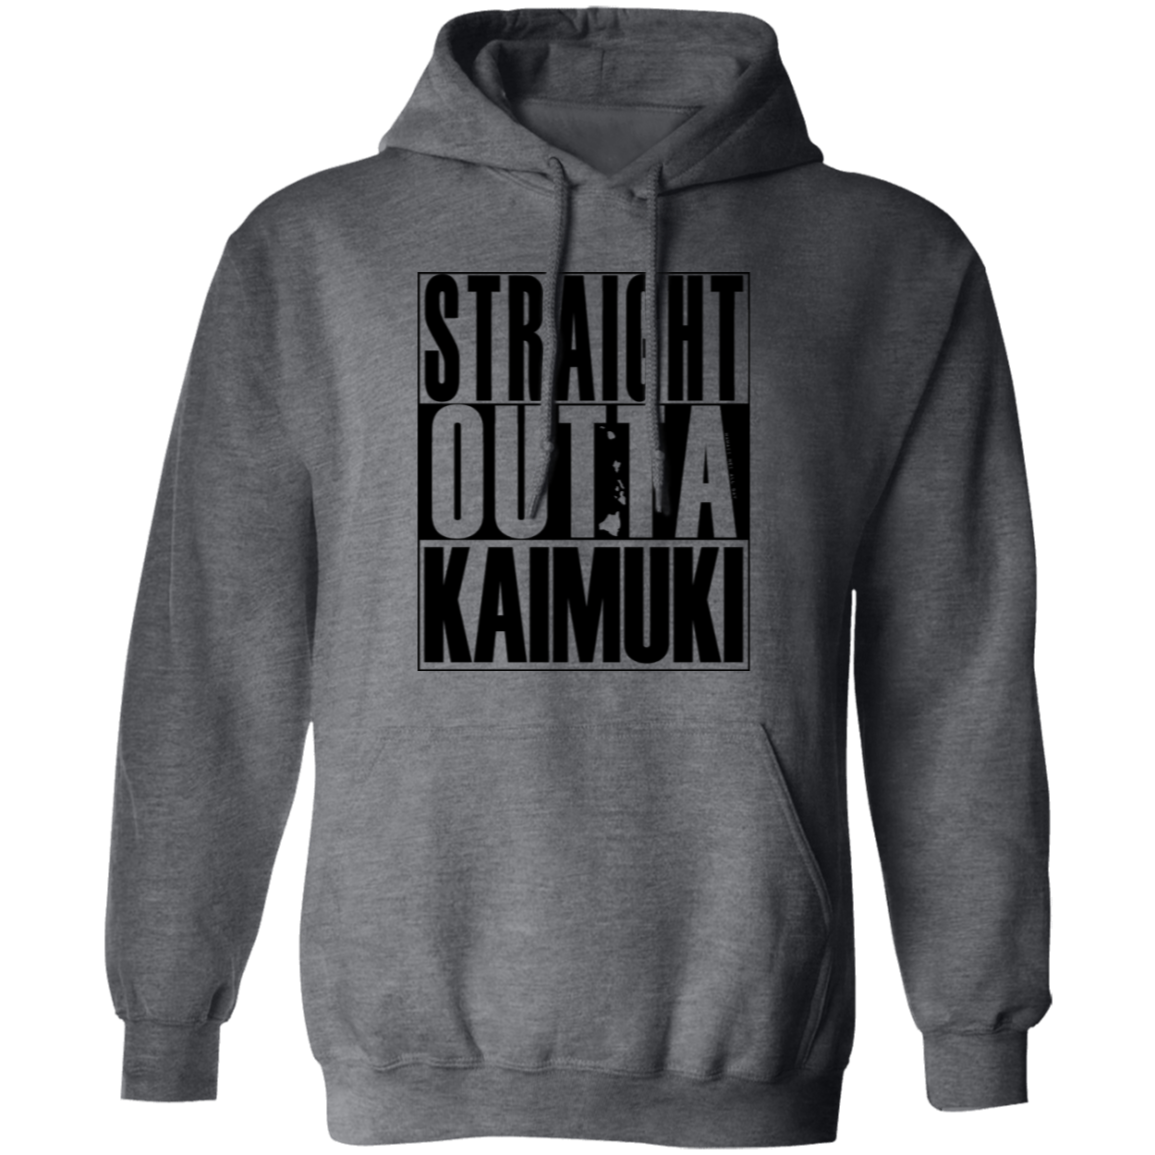 Straight Outta Kaimuki (Black)